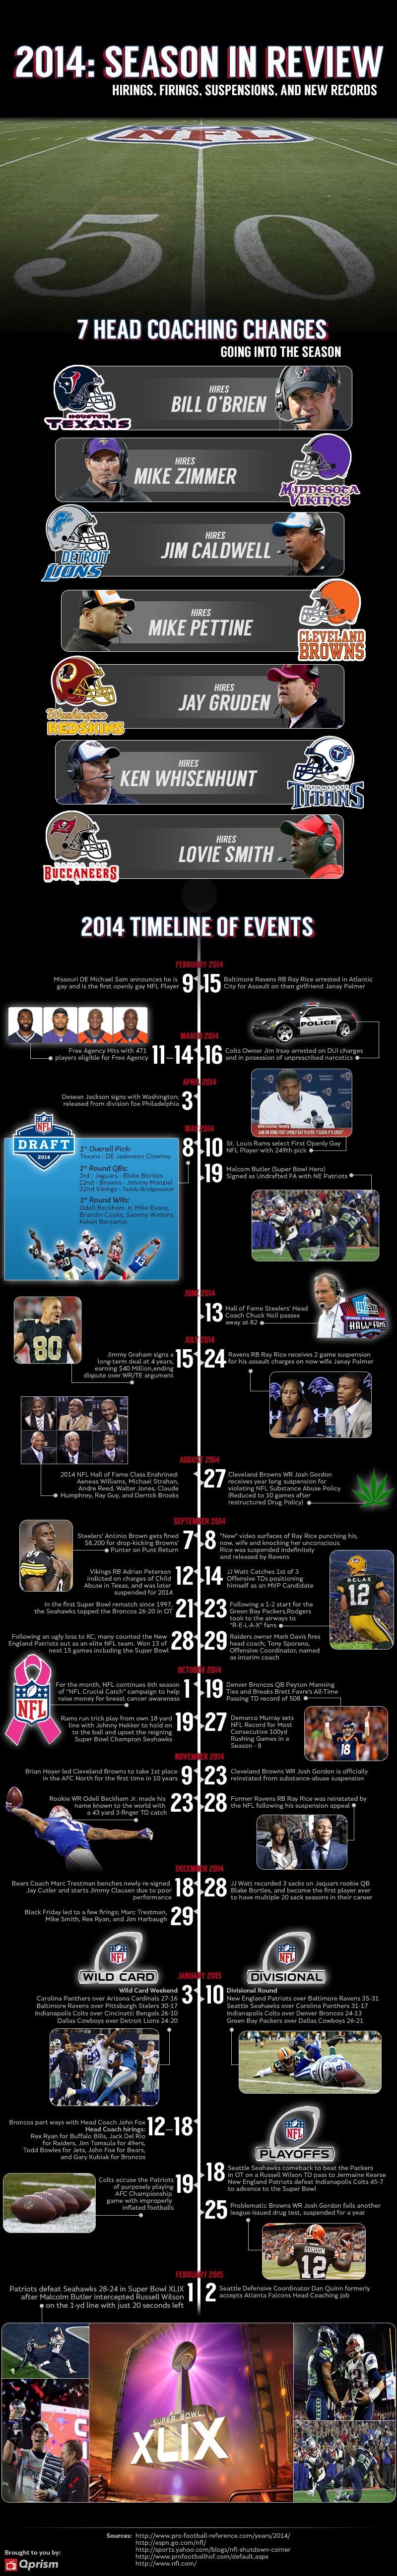 NFL-2014-season-in-review